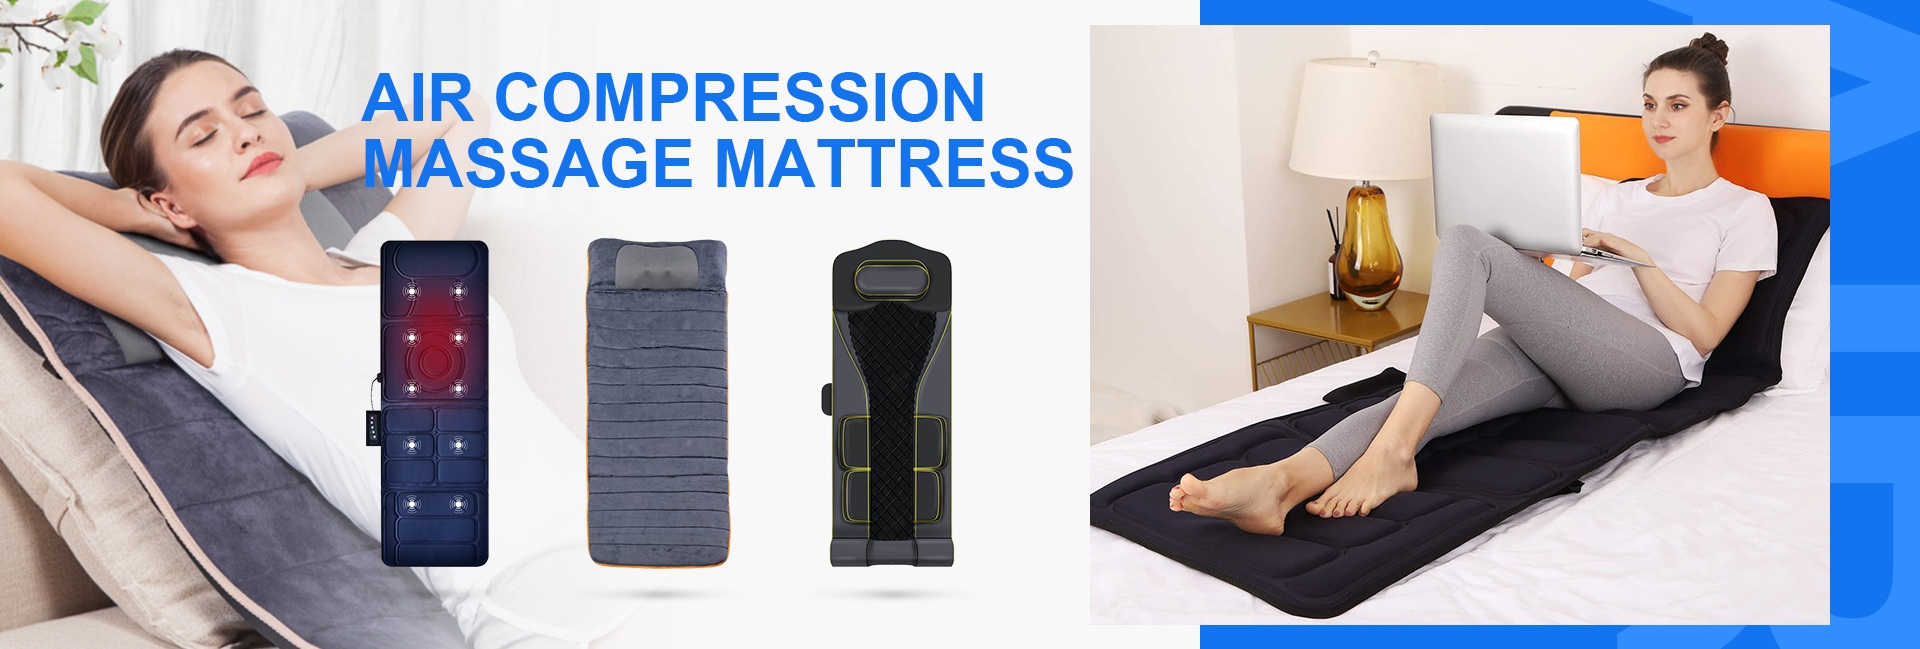 Massage mattress